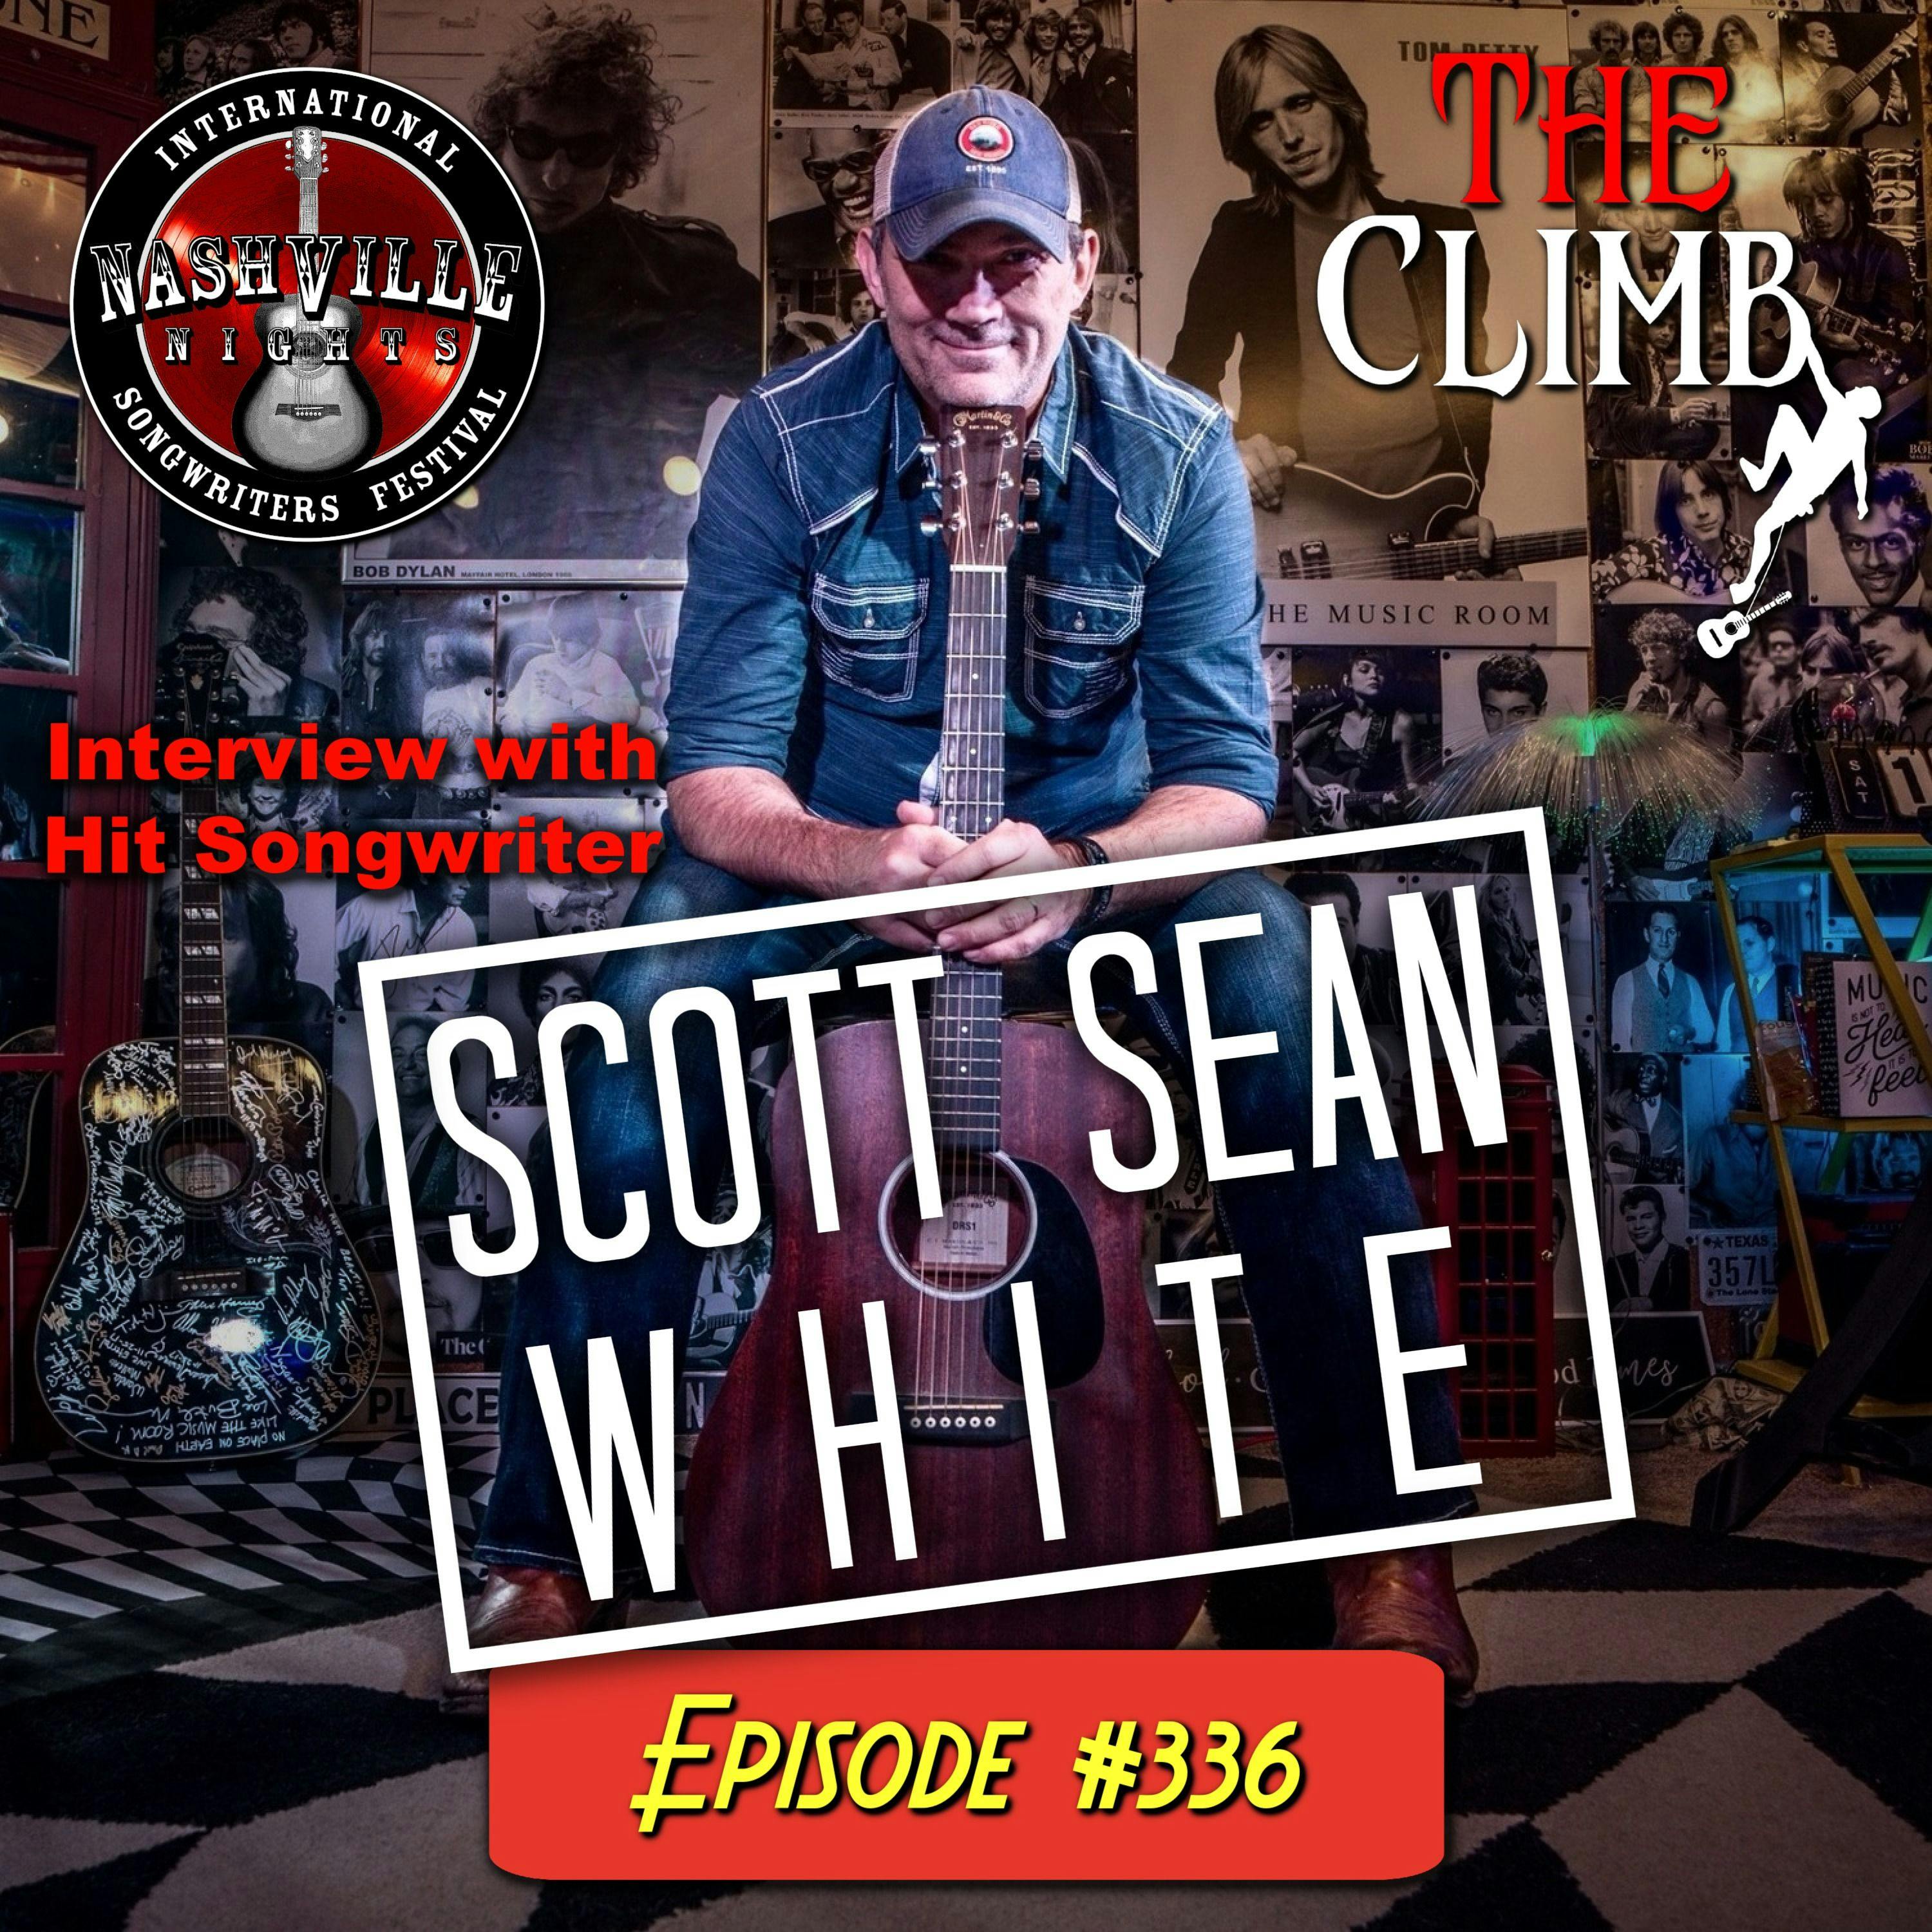 Ep 336: Interview With Hit Songwriter Scott Sean White